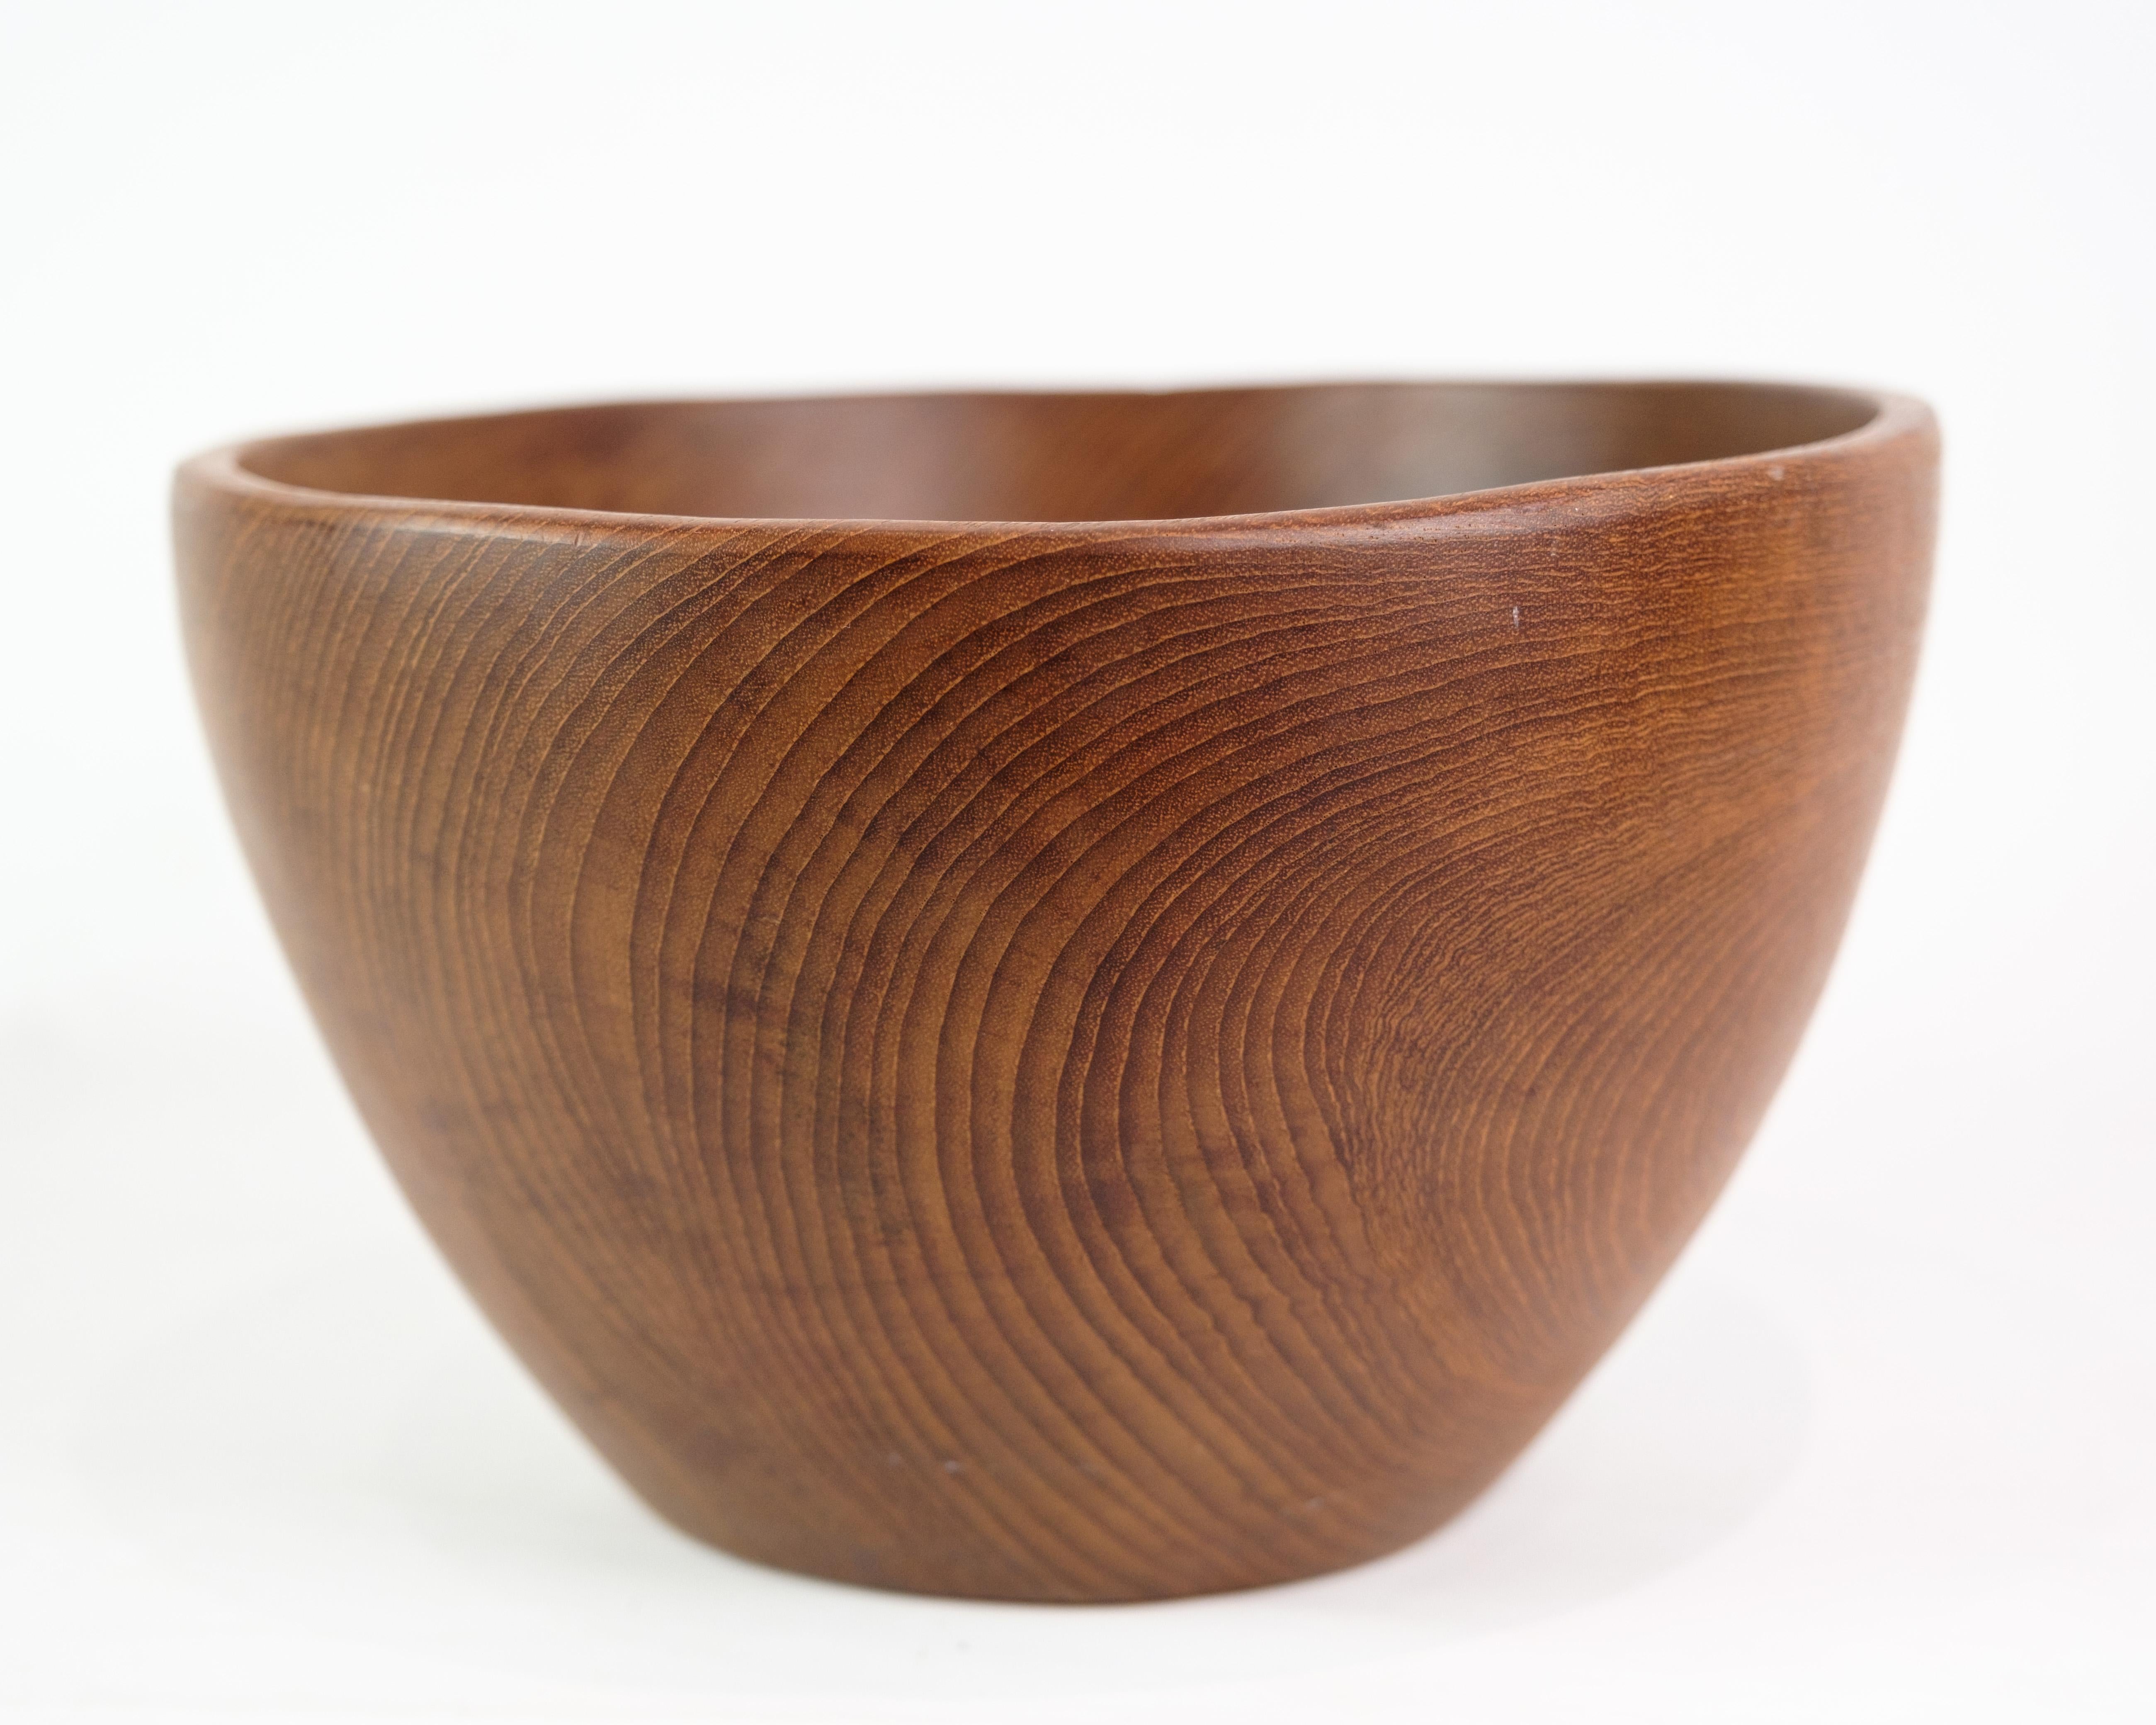 Mid-Century Modern Bowl Made In Teak, Danish Design From 1960s For Sale